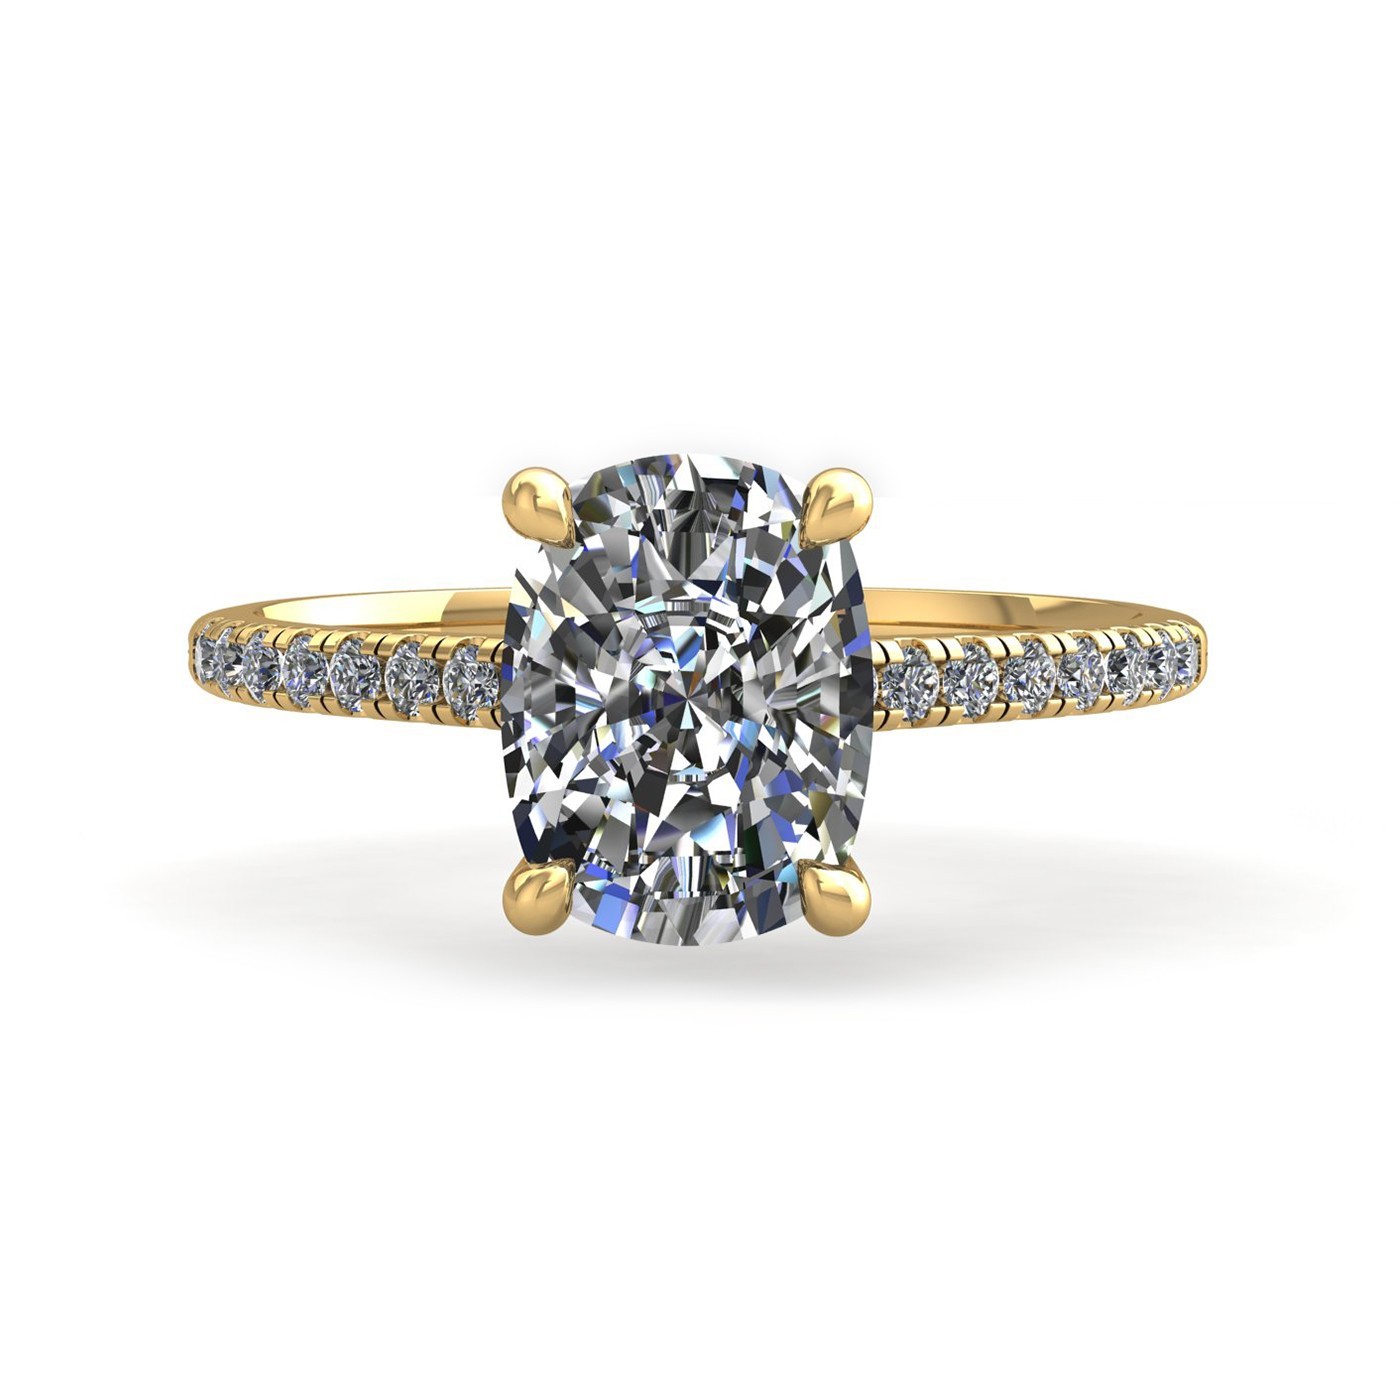 18k white gold  4 prongs cushion cut diamond engagement ring with whisper thin pavÉ set band Photos & images